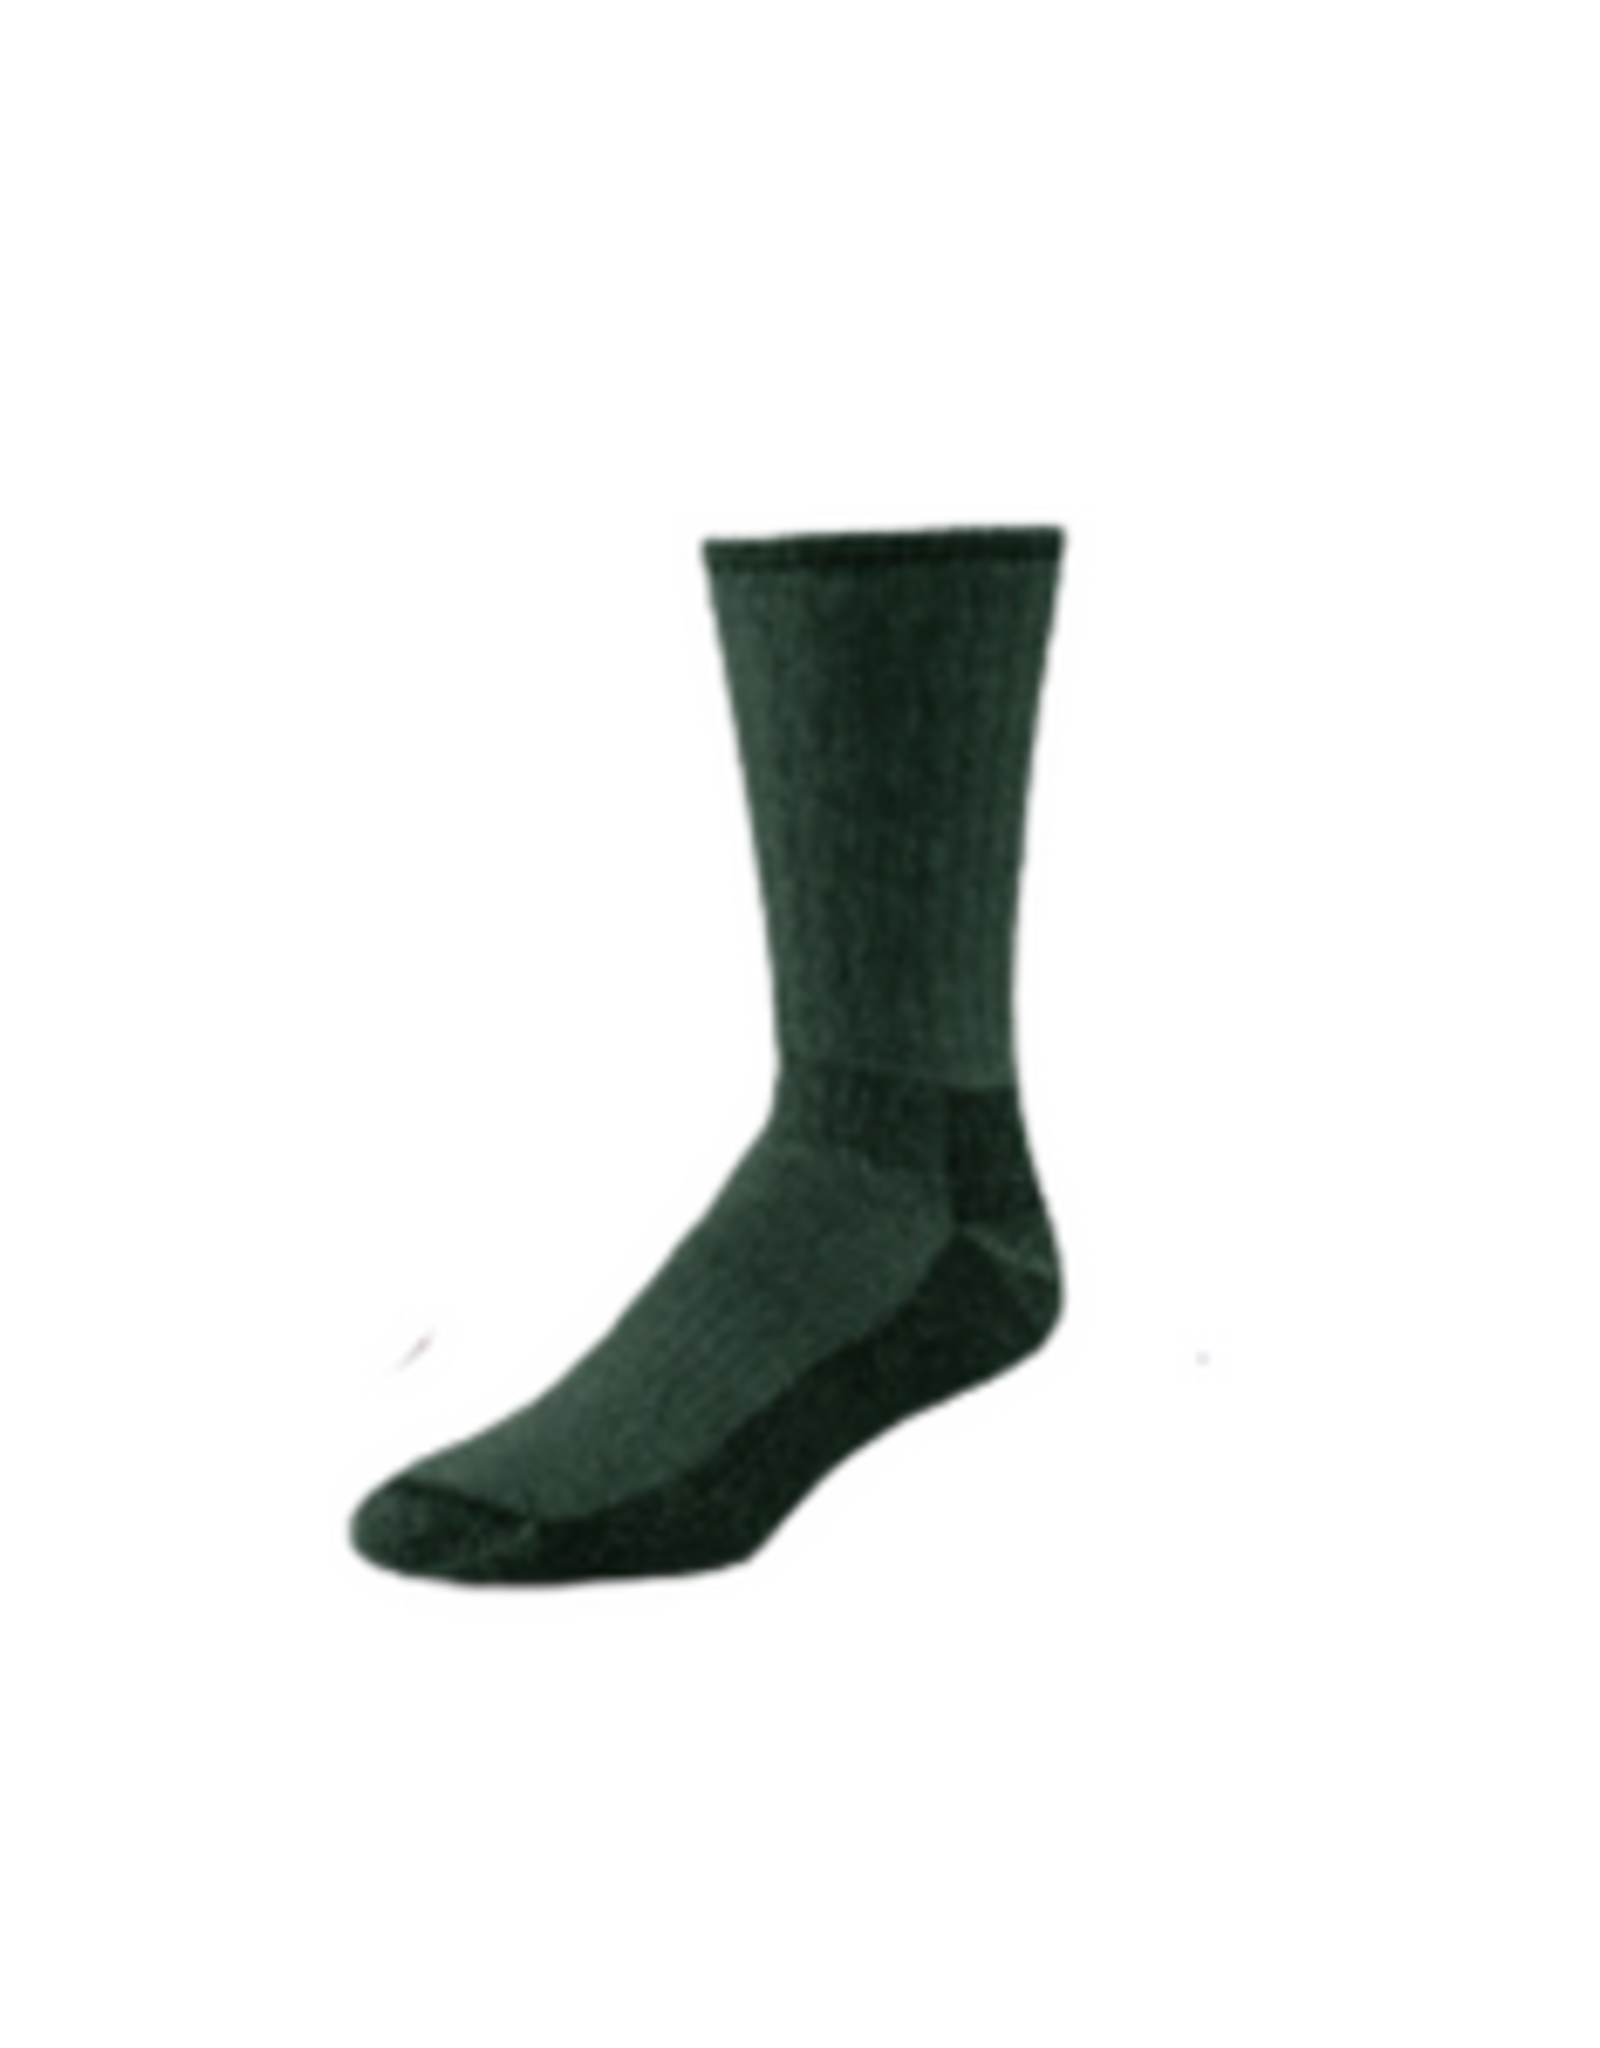 Maggie's Organics Mountain Hiker Socks (Dark Forest Green)